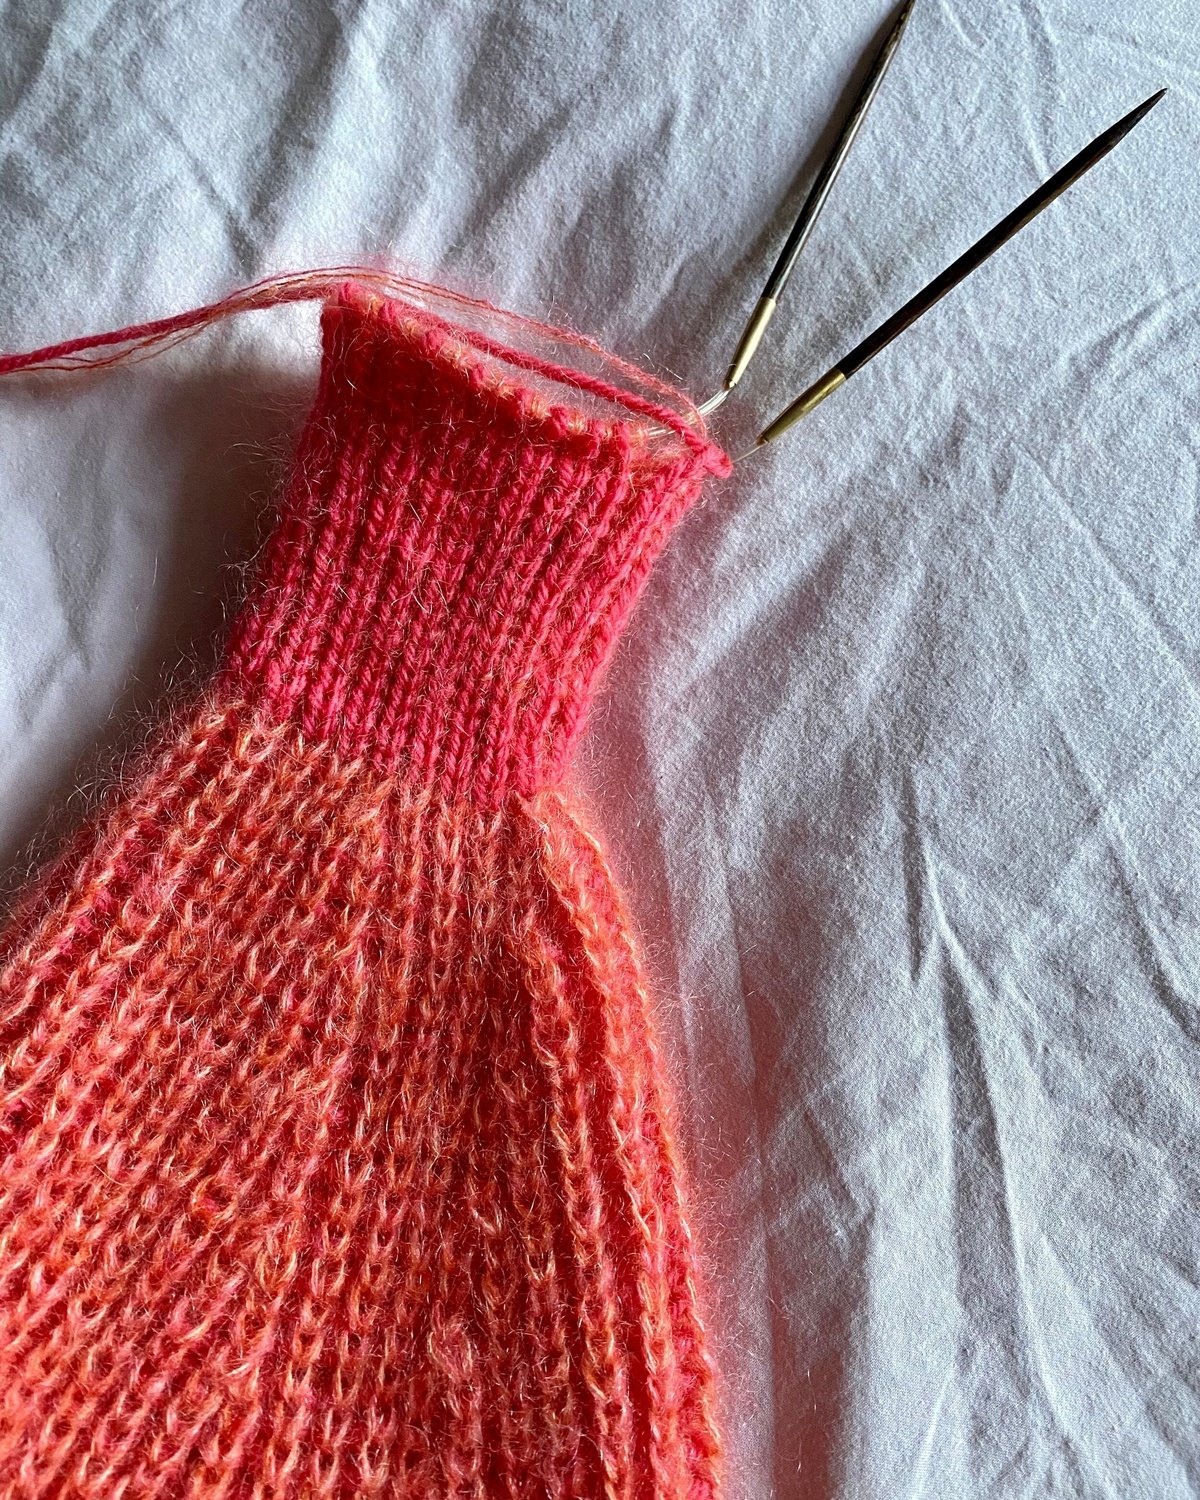 Karma Chameleon Sweater English Popknit knitting pattern